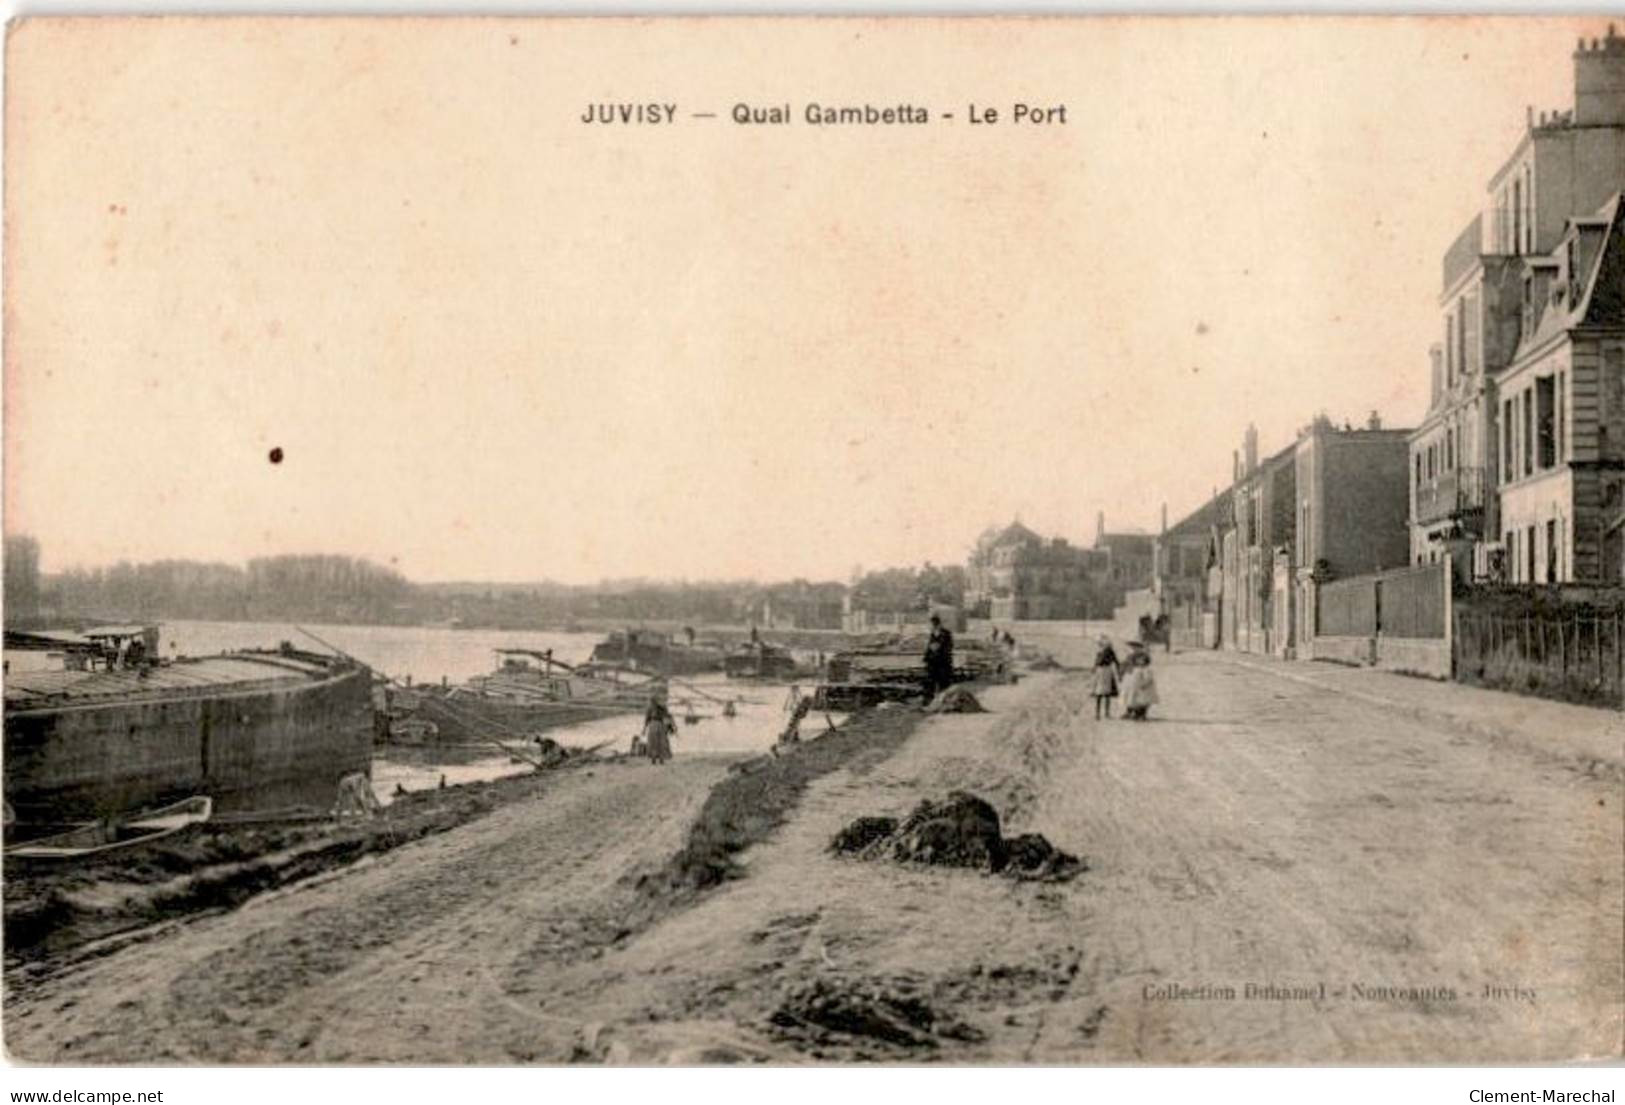 JUVISY-sur-ORGE: Quai Gambetta, Le Port - Très Bon état - Juvisy-sur-Orge